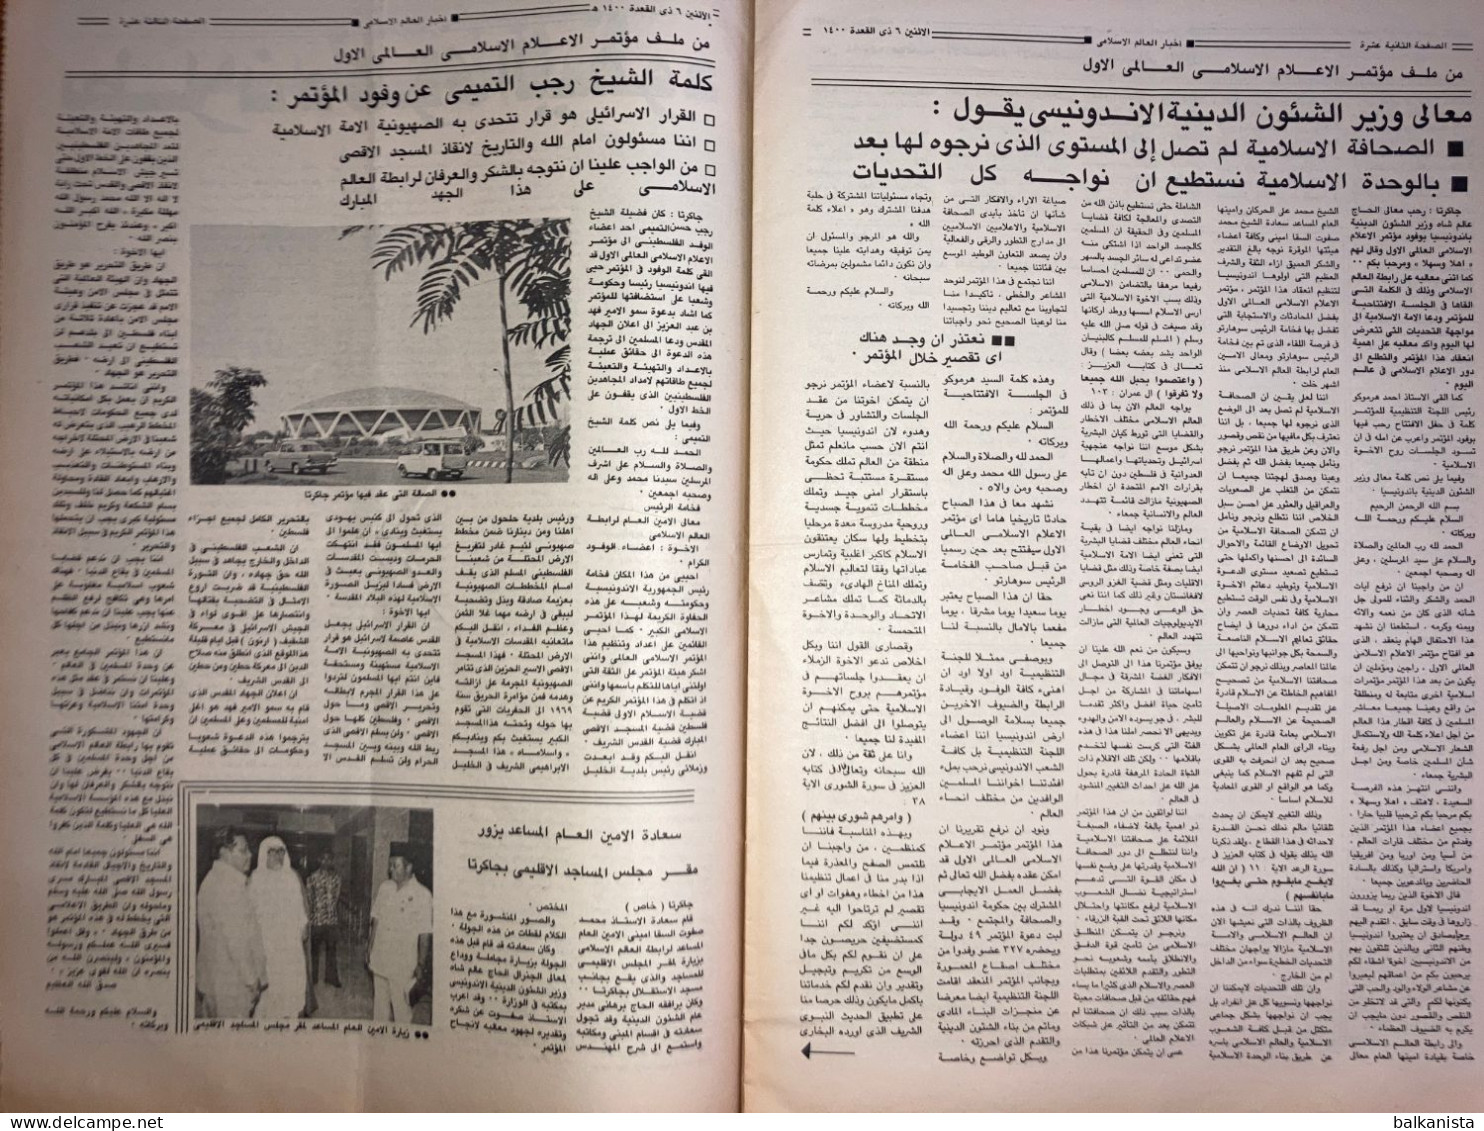 Saudi Arabia Akhbar al-Alam al-Islami Newspaper 15 September 1980